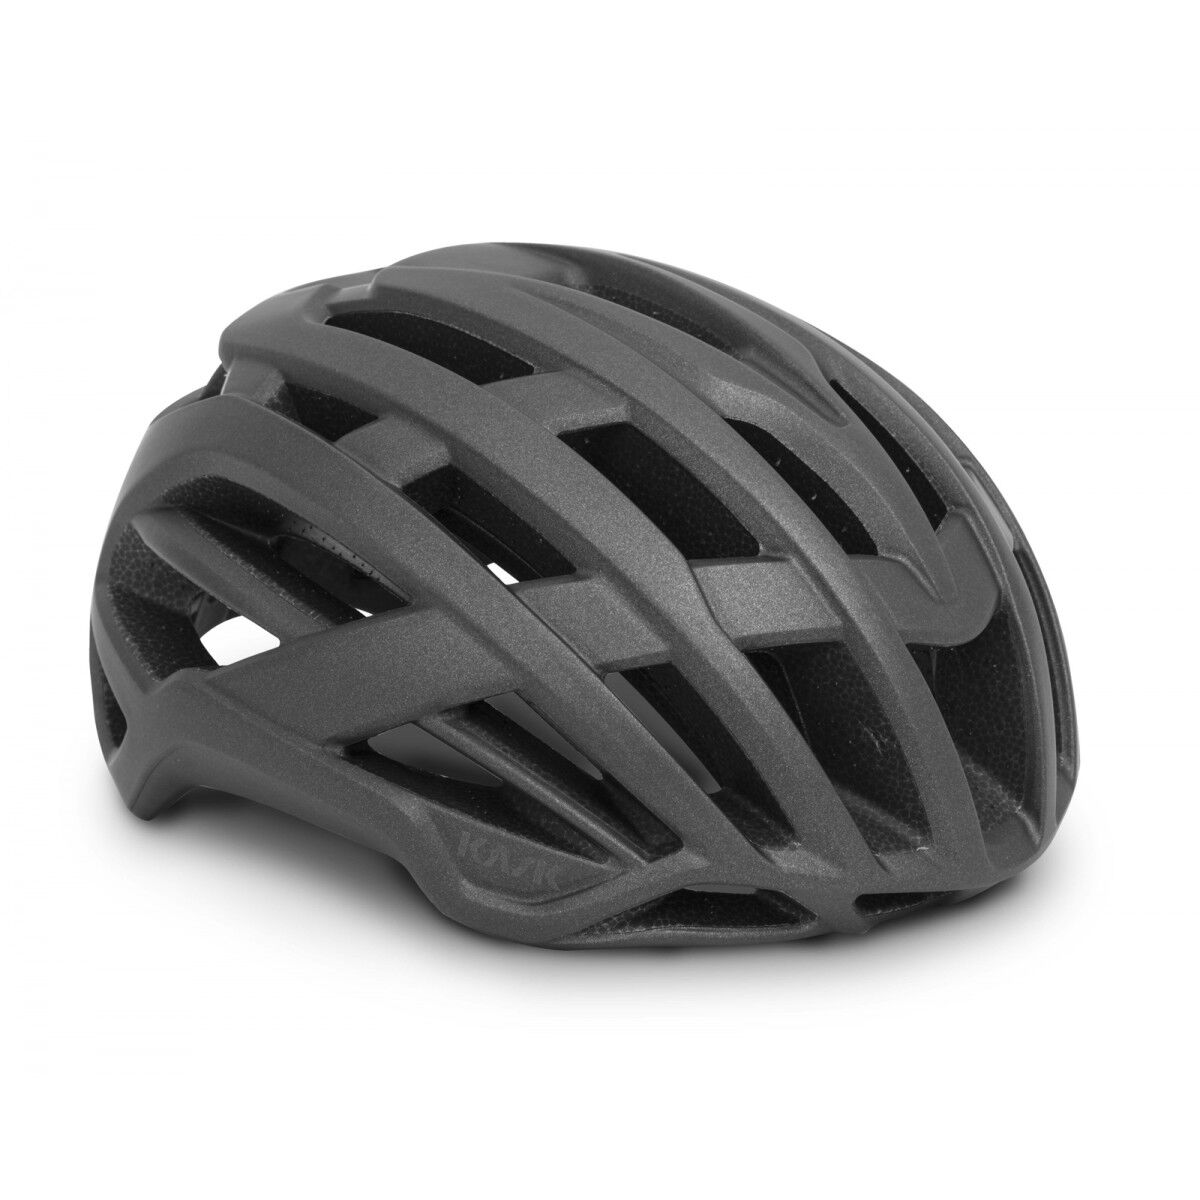 KASK Valegro Mat WG11 - Road bike helmet